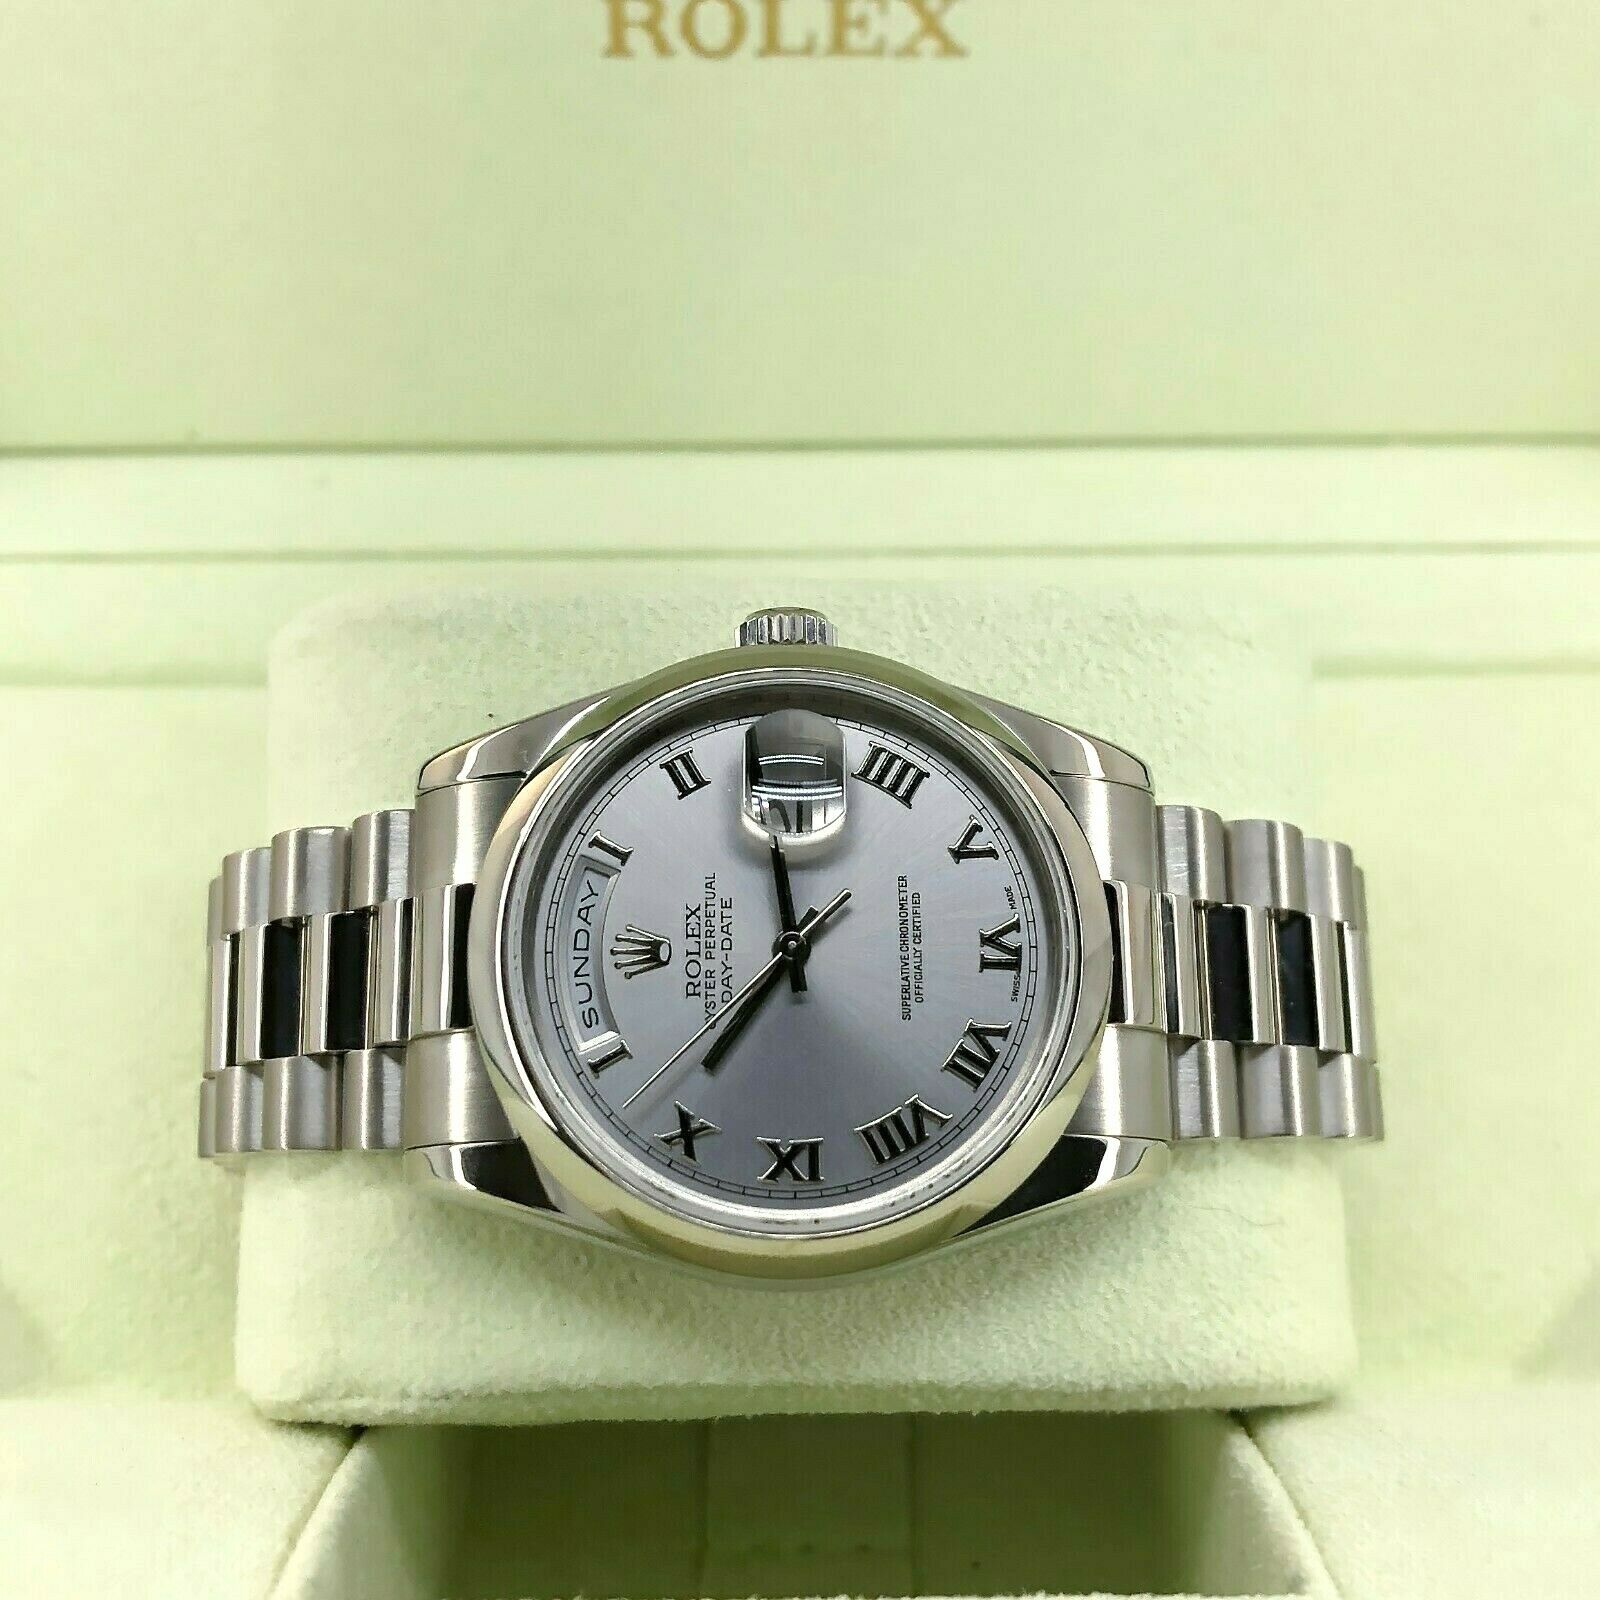 Rolex Day Date President 18K White Gold 36mm Watch 118209 Complete Set w Receipt